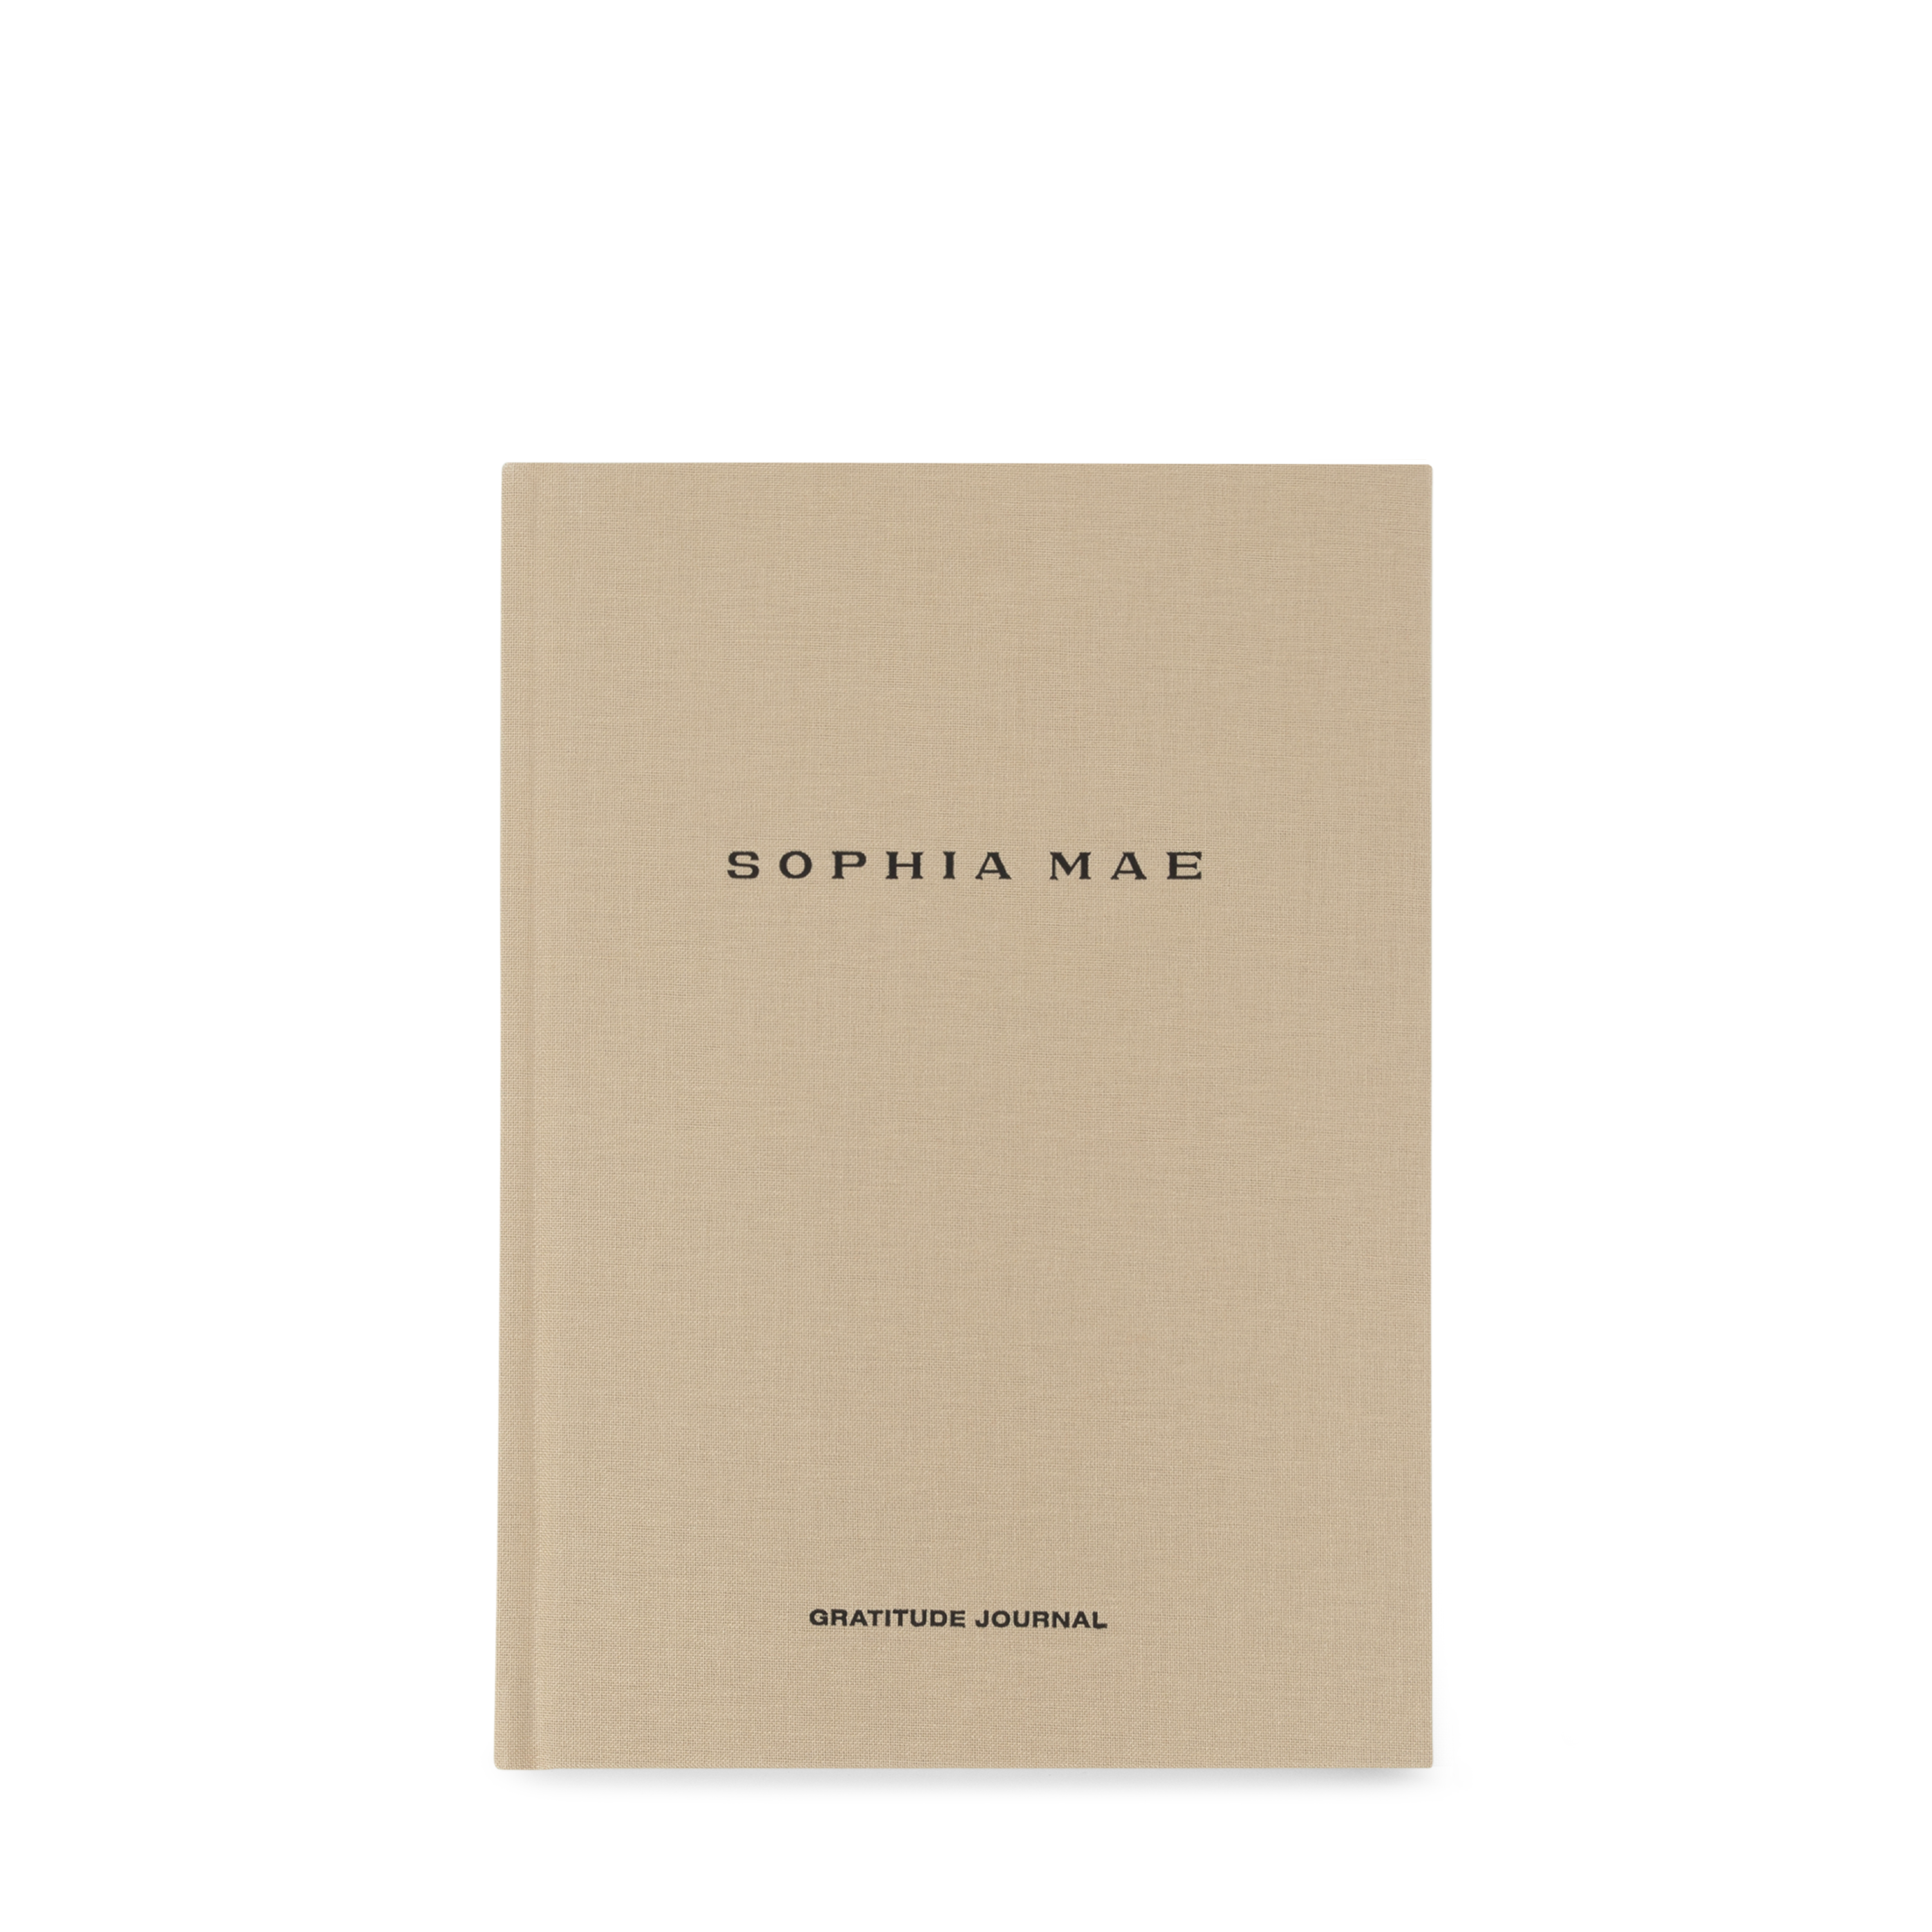 GRATITUDE JOURNAL | SOPHIA MAE by Monica Geuze